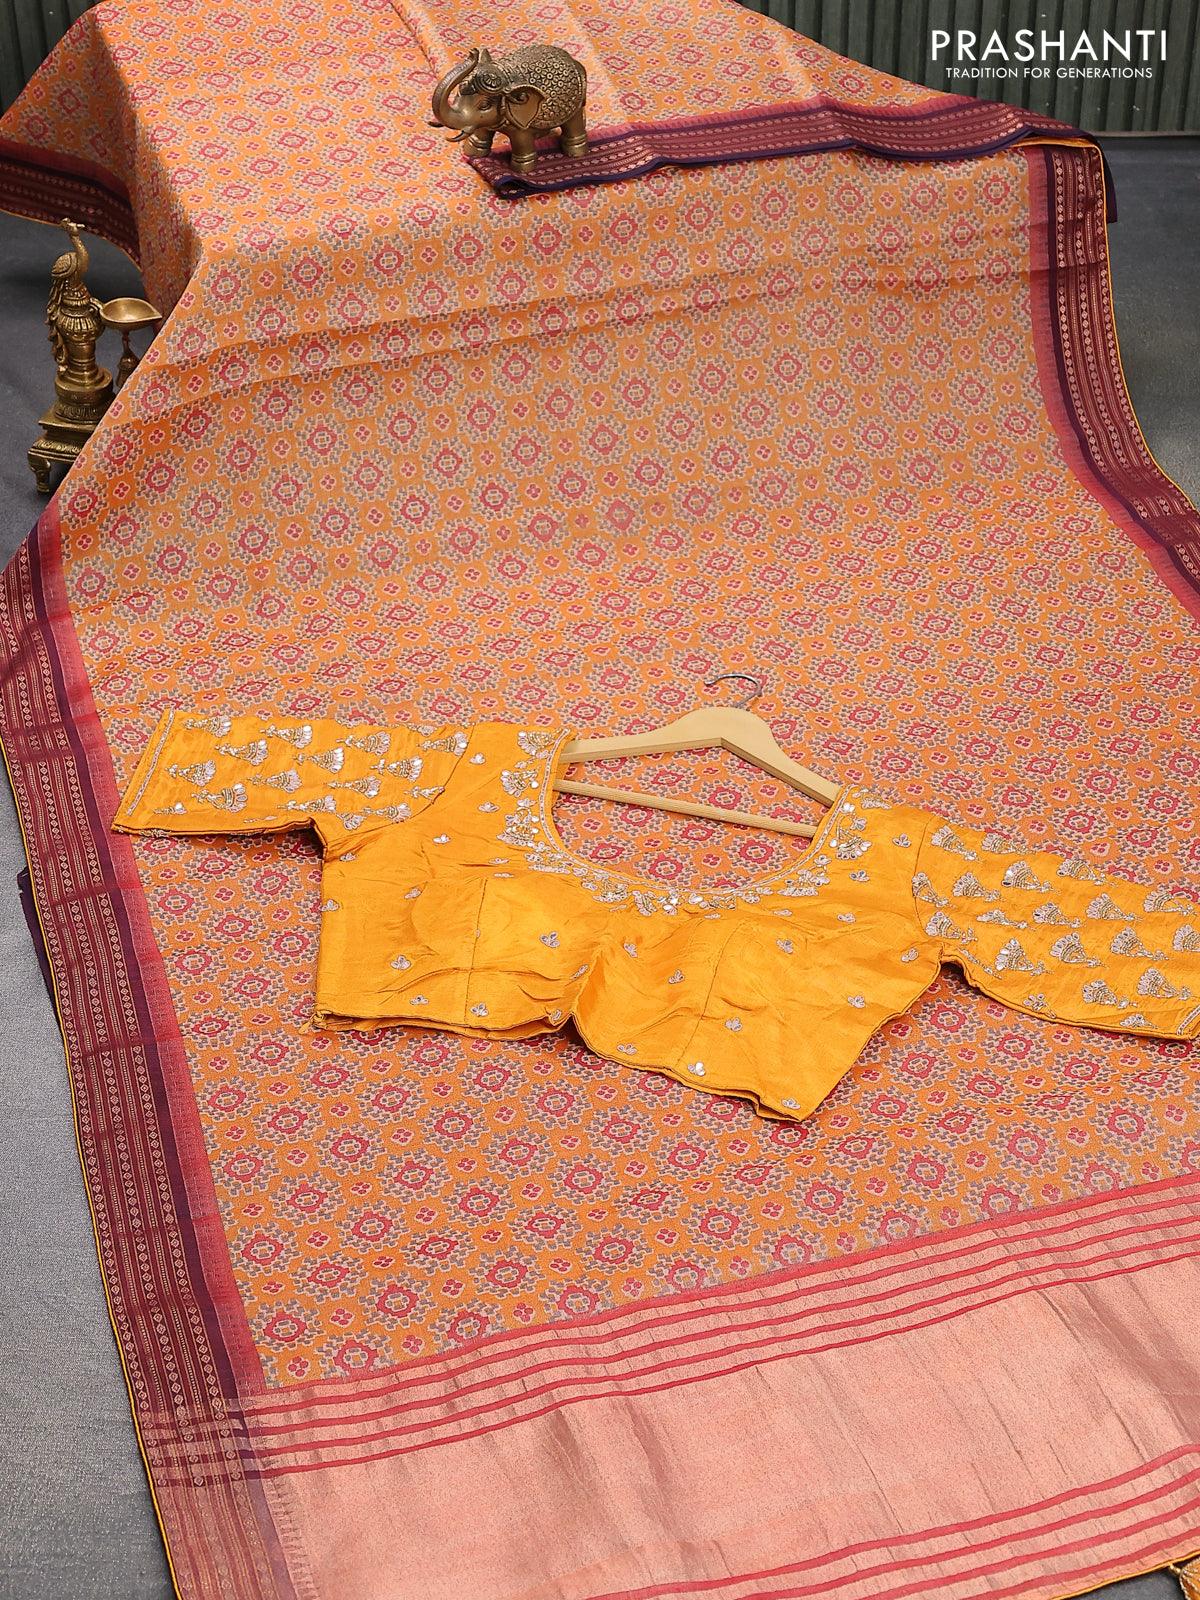 Women's Sari Blouse Round Neck Lehenga Choli Blouse Crop top Tunic Ready to  Wear Baby Pink at Amazon Women's Clothing store